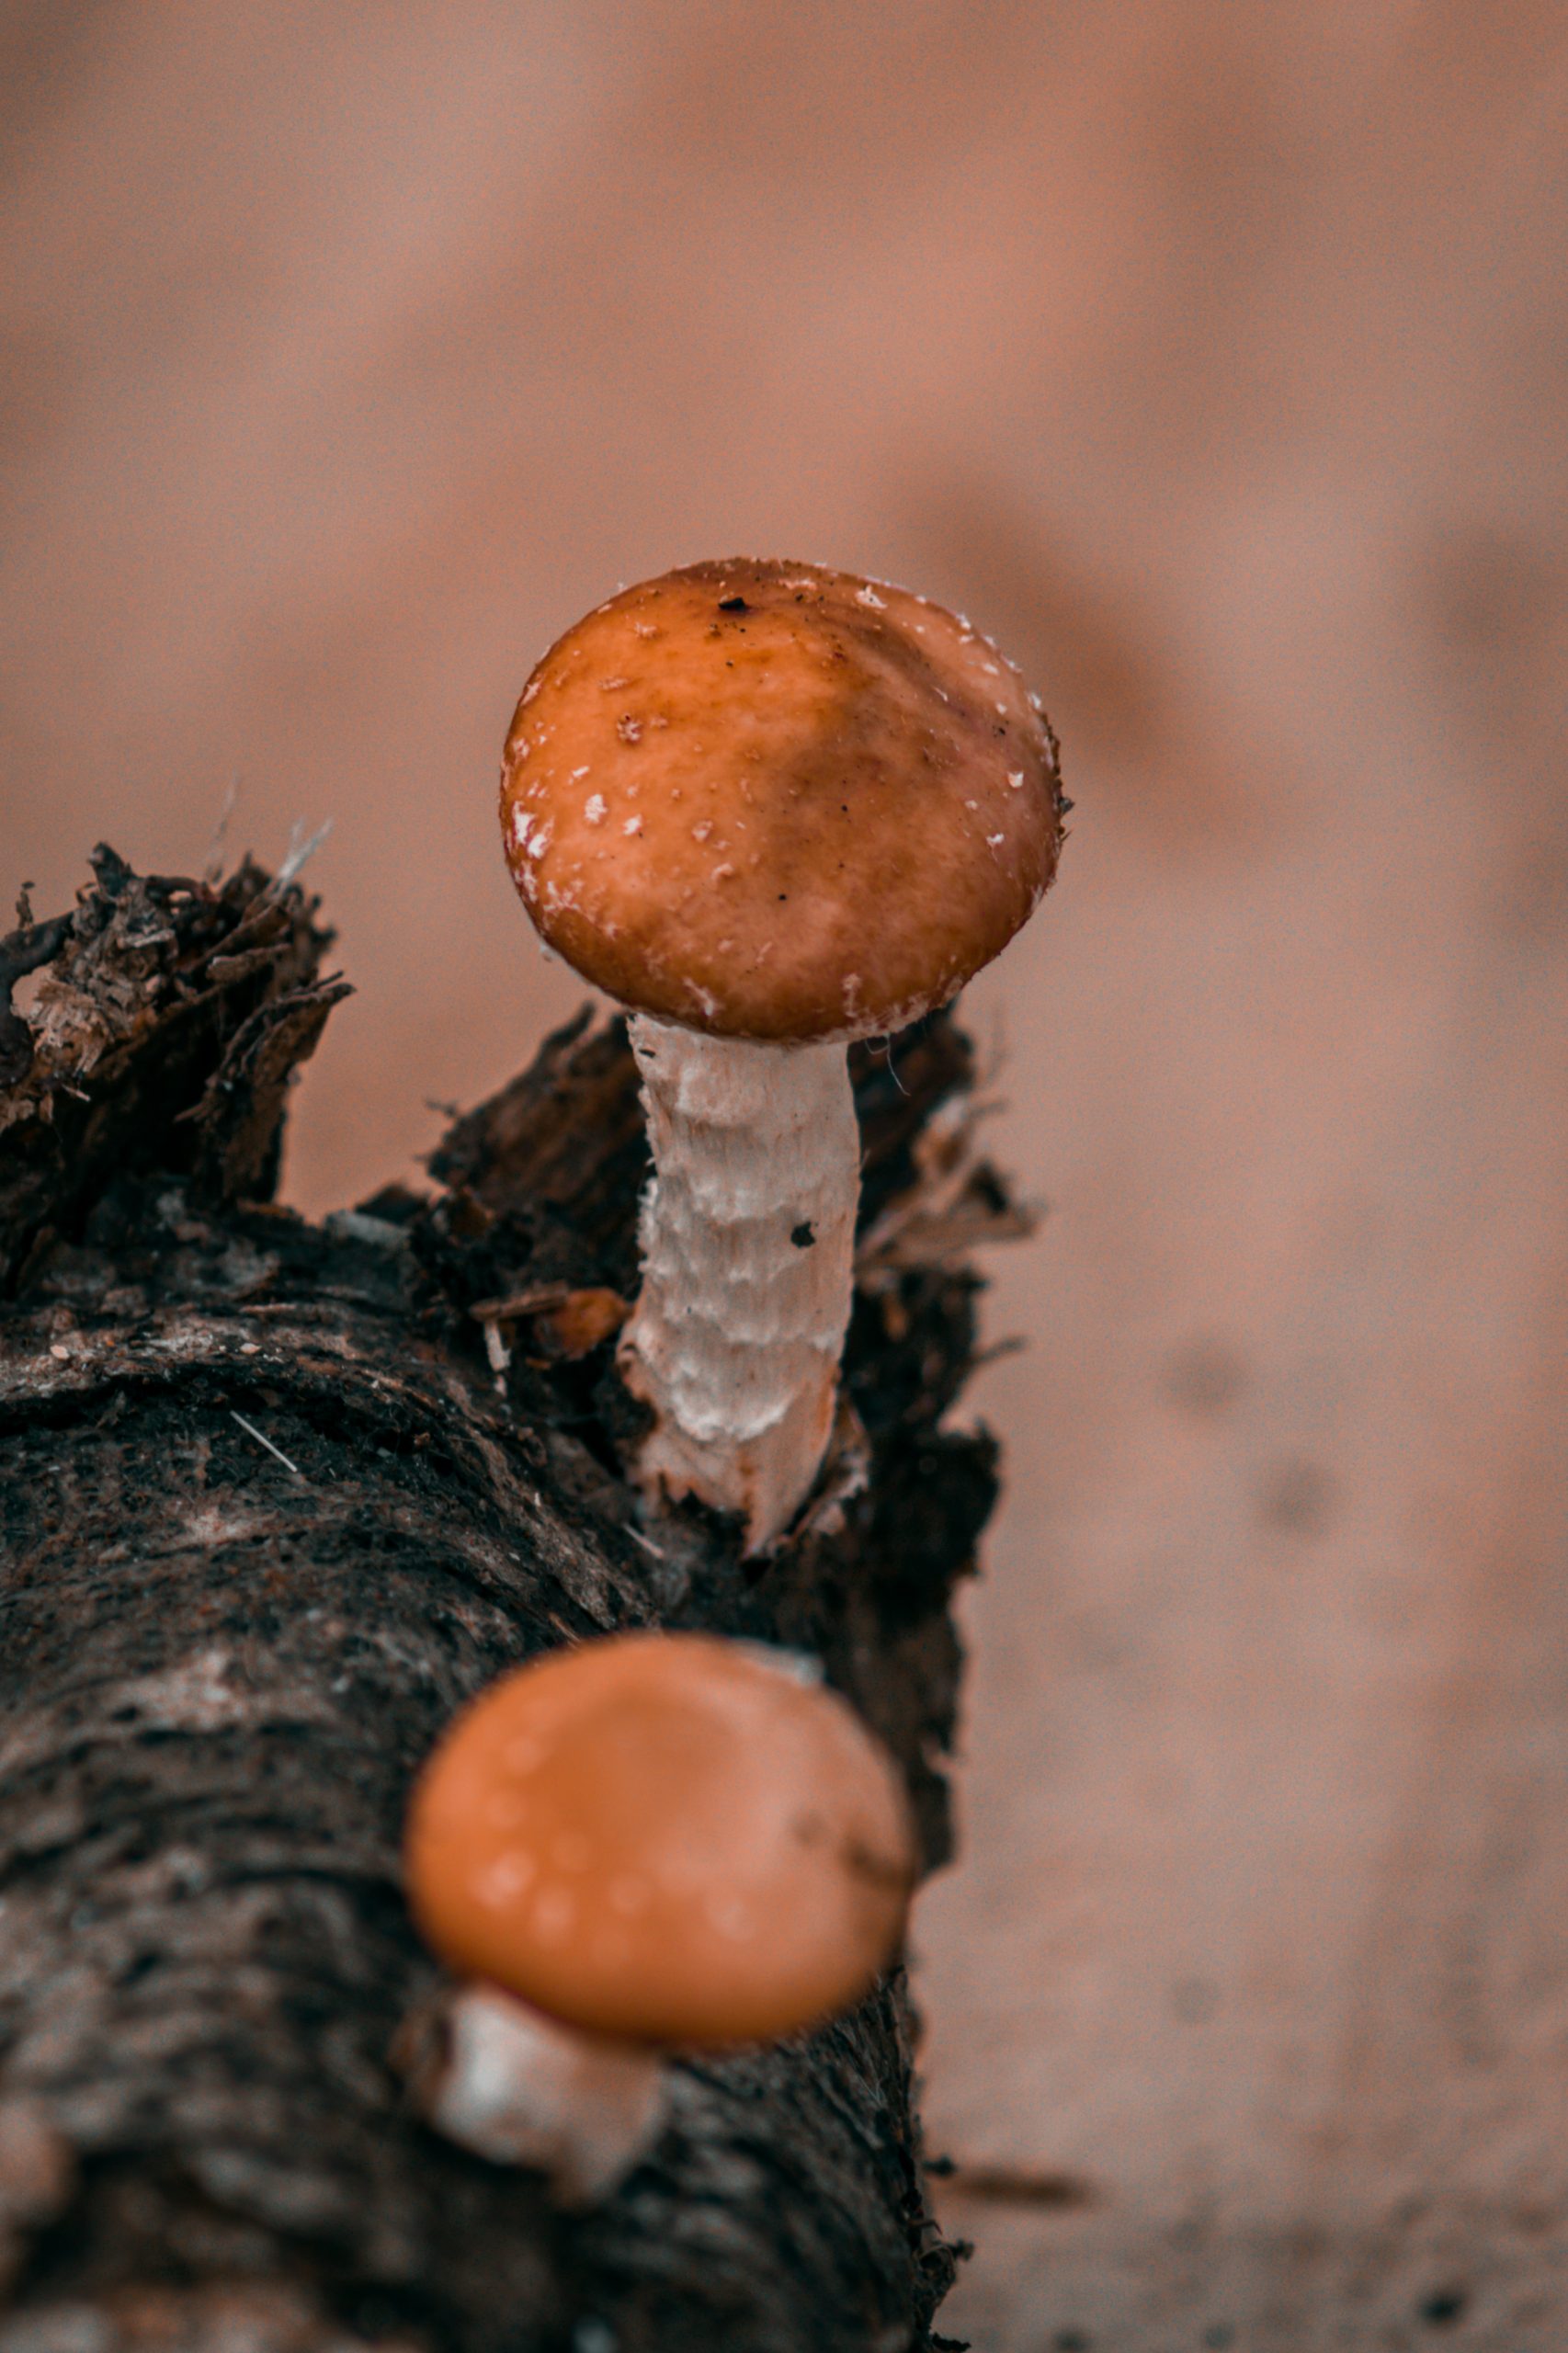 Young Mushroom on tree